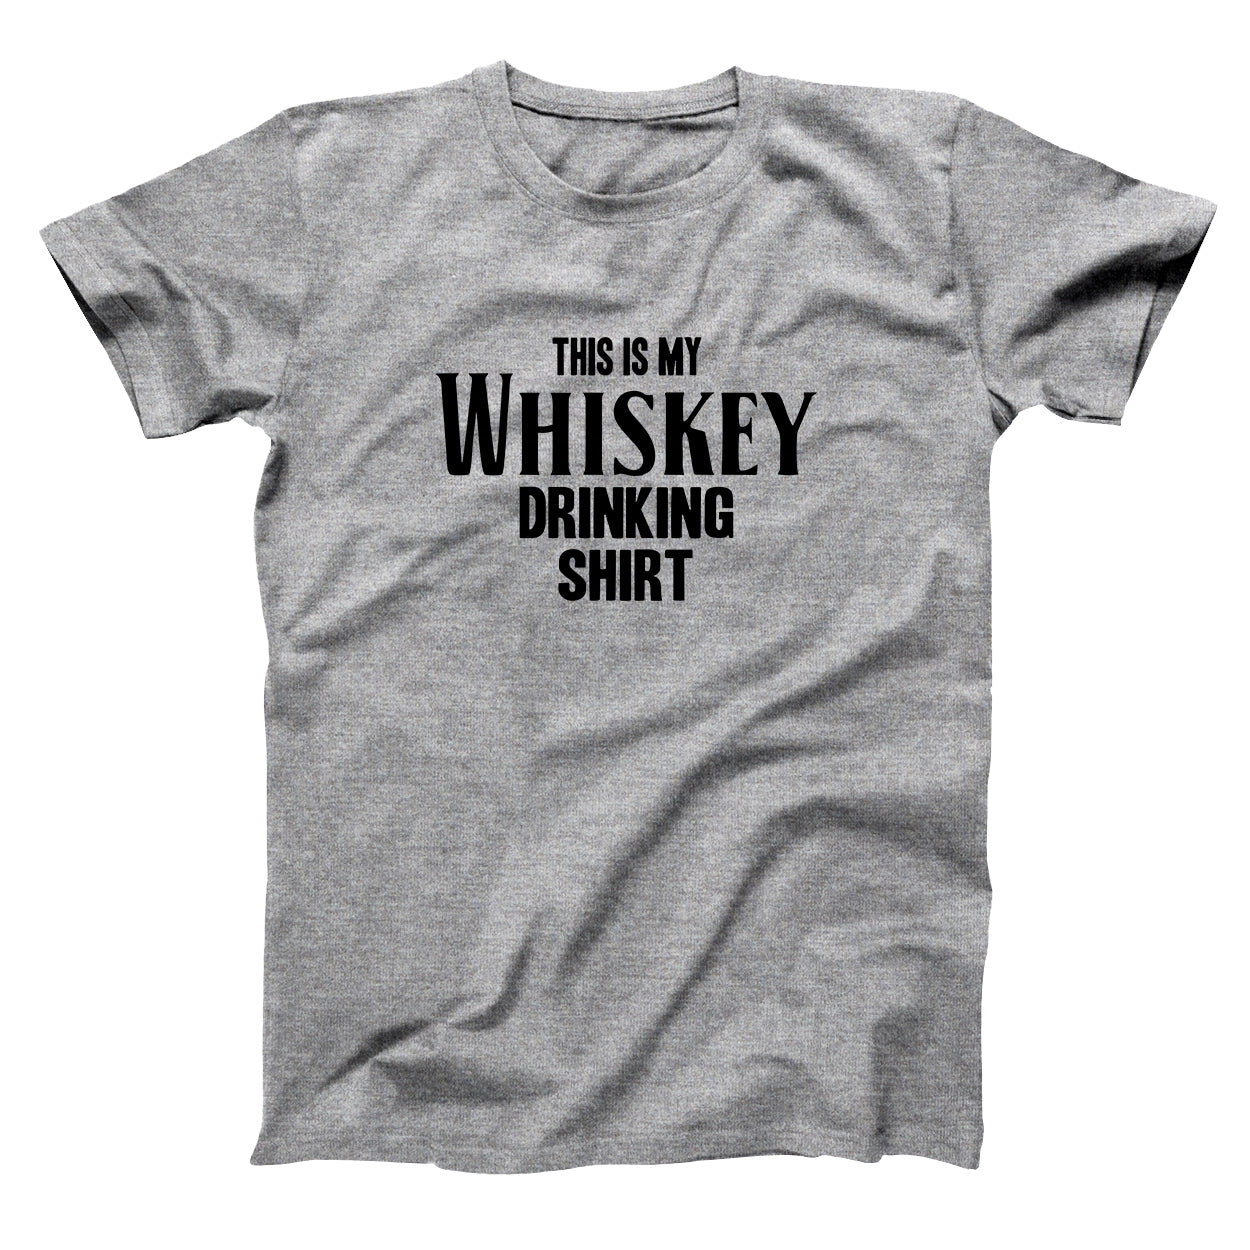 My Whiskey Drinking Shirt Tshirt - Donkey Tees